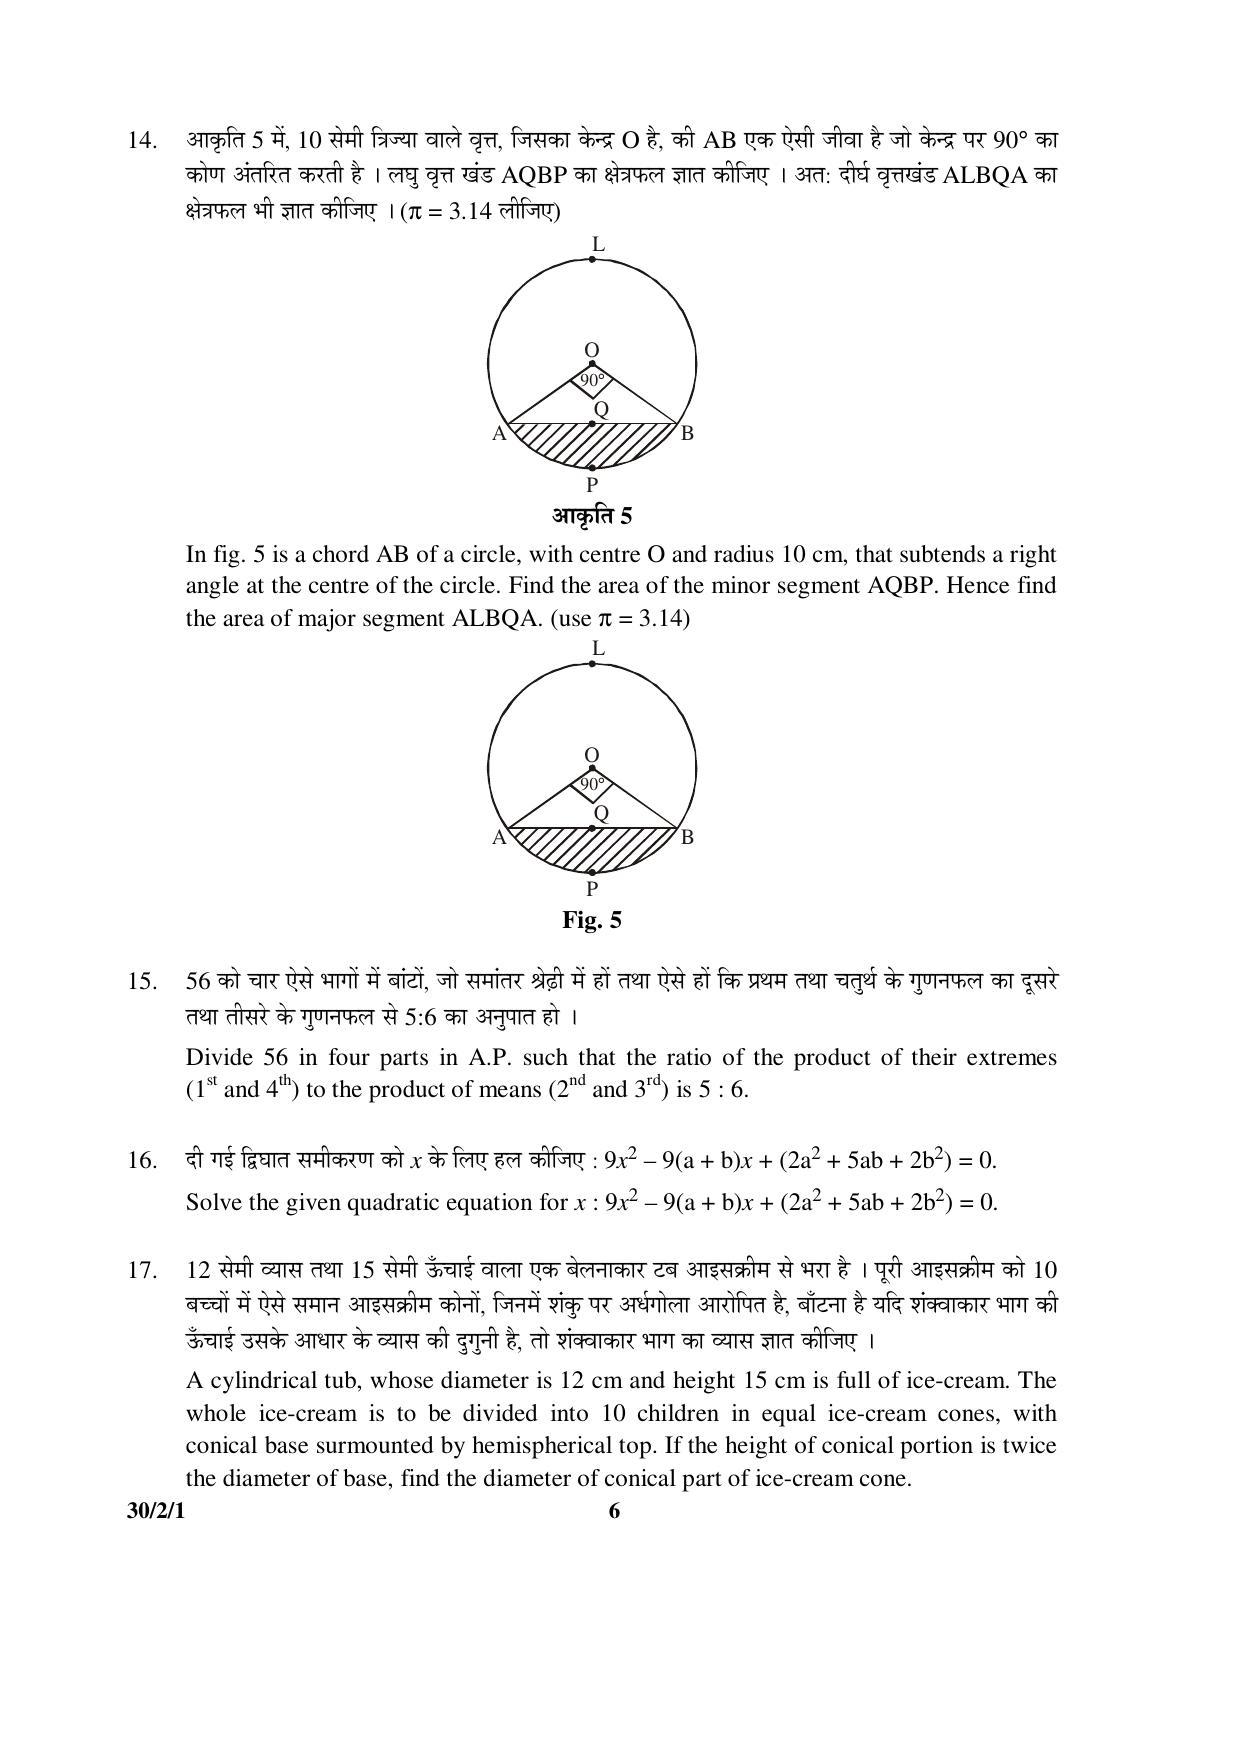 CBSE Class 10 30-2-1 _Mathematics 2016 Question Paper - Page 6